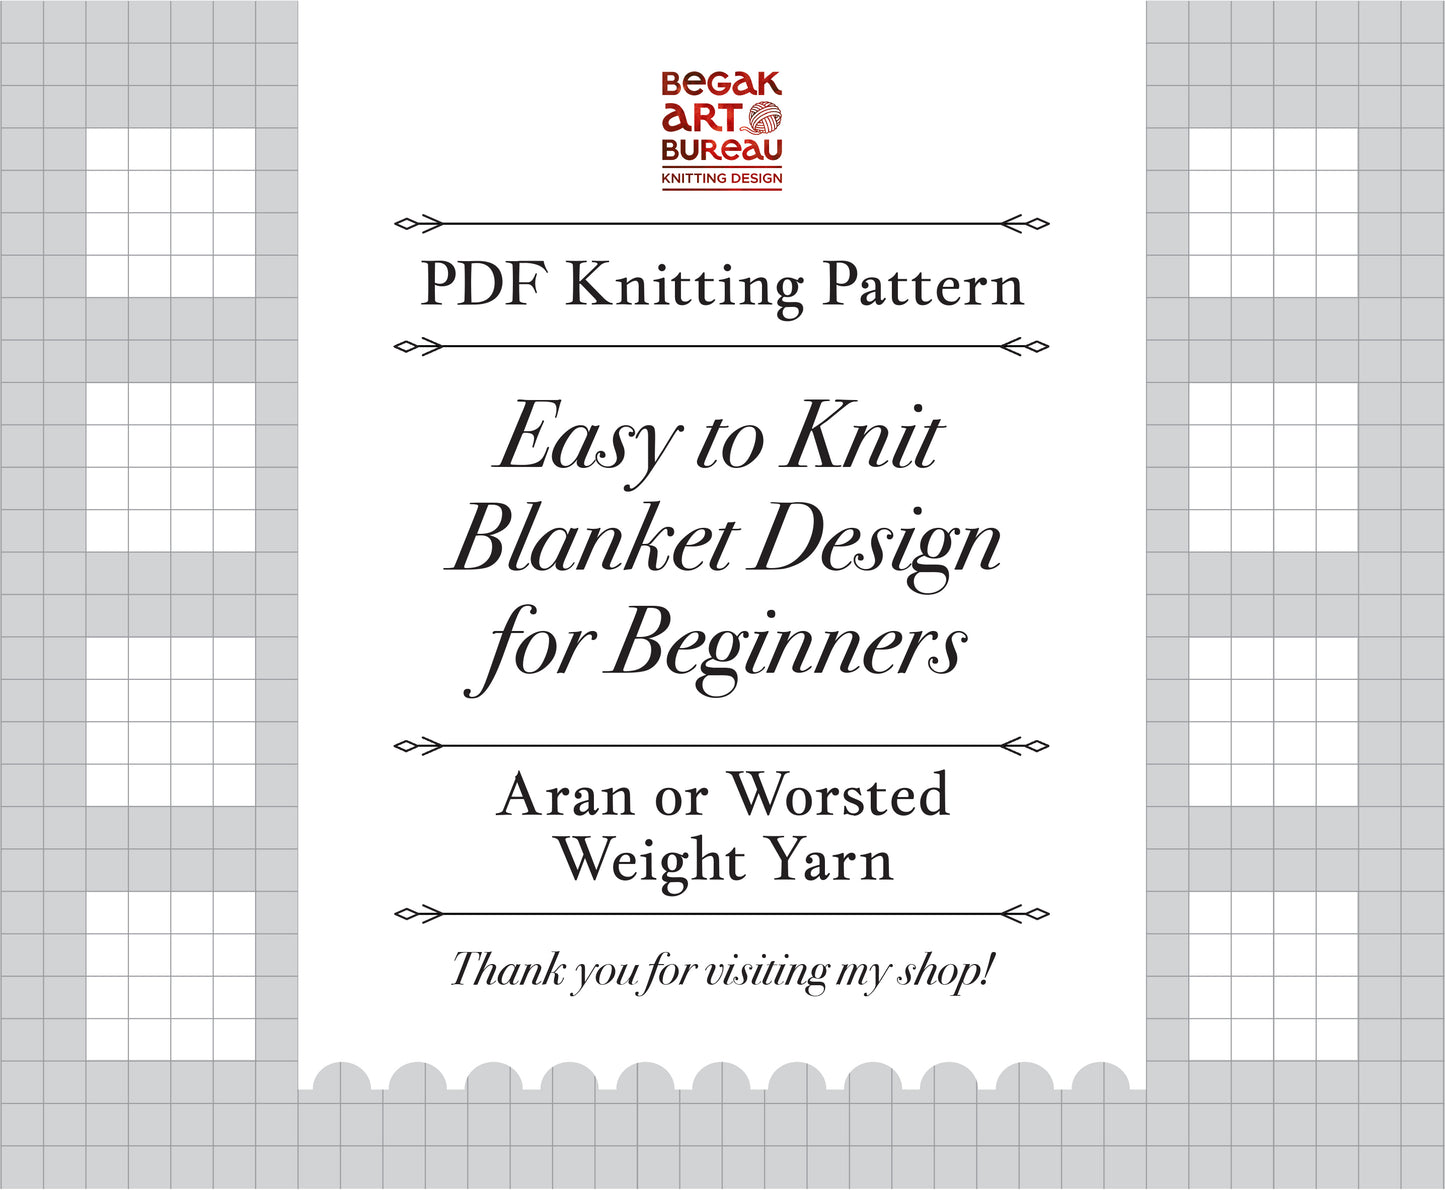 LELAND Baby Blanket Knitting Pattern in 4 Sizes